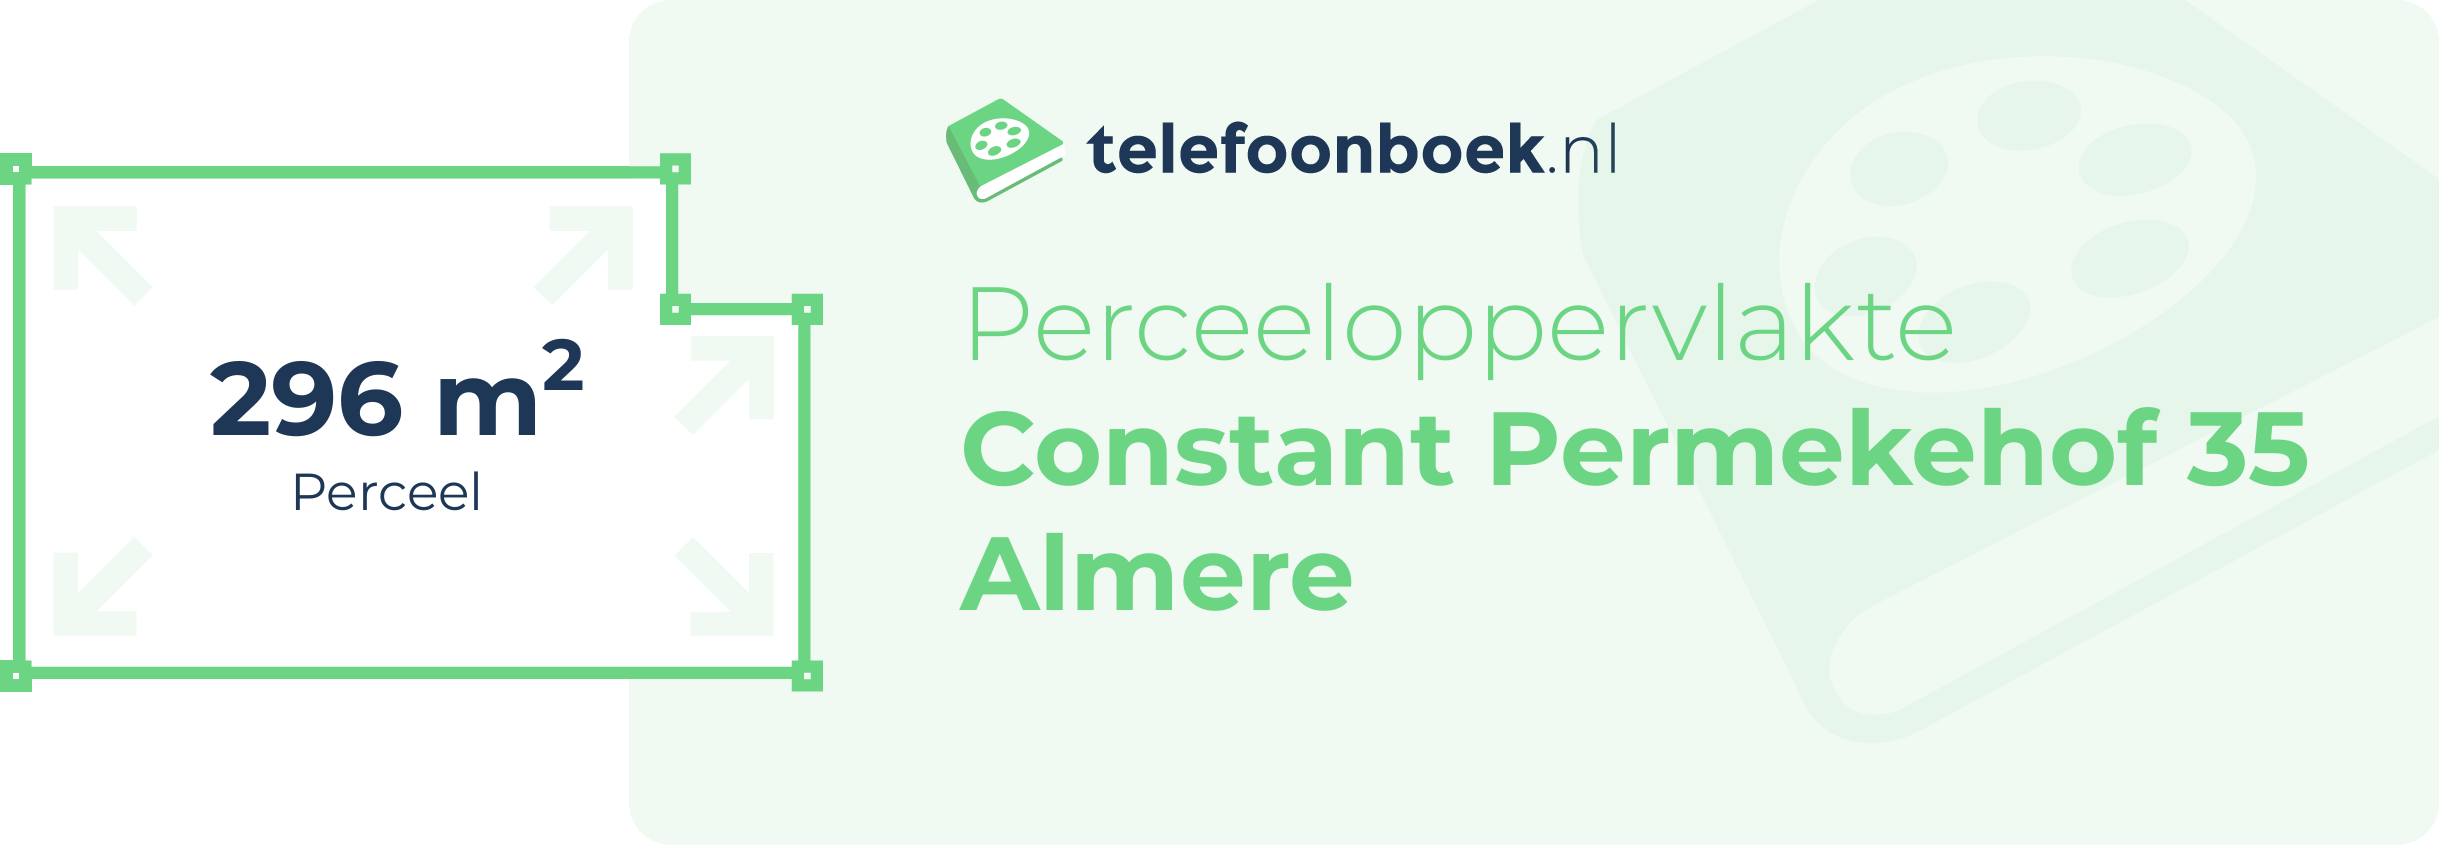 Perceeloppervlakte Constant Permekehof 35 Almere